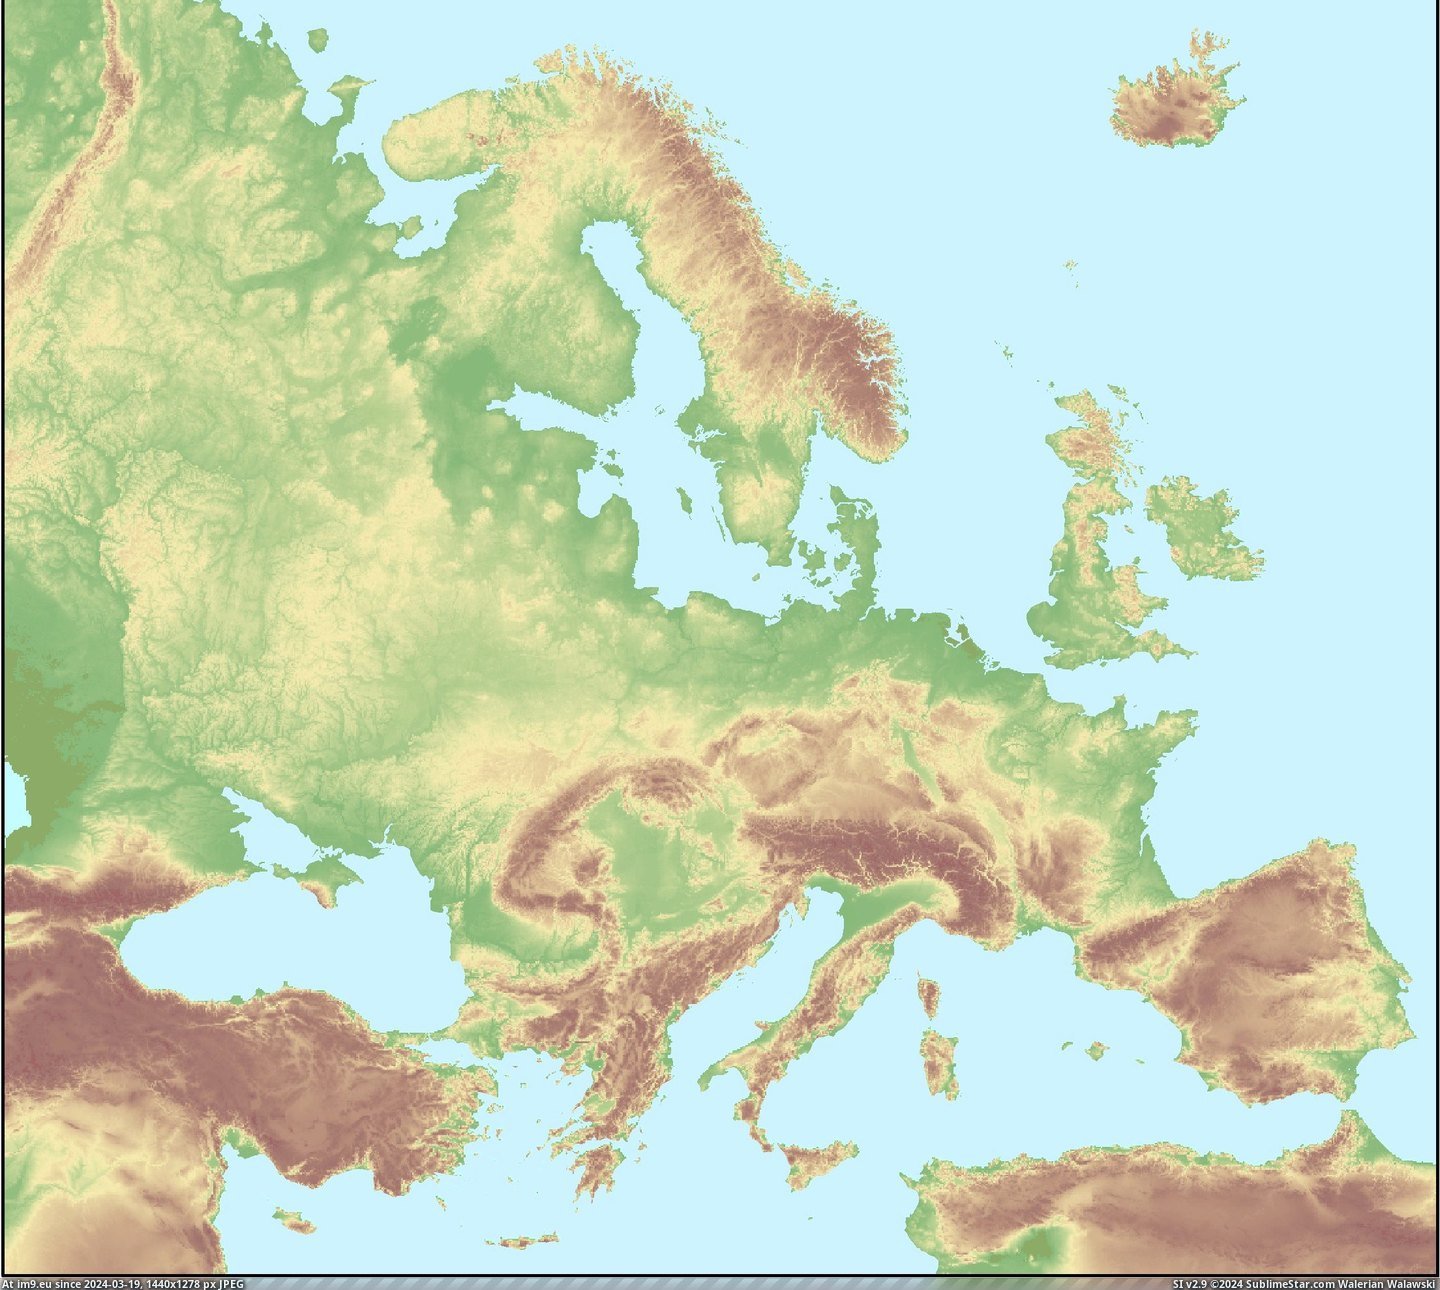  #Europe  [Mapporn] Europe backwards [2,208x1,971] Pic. (Obraz z album My r/MAPS favs))